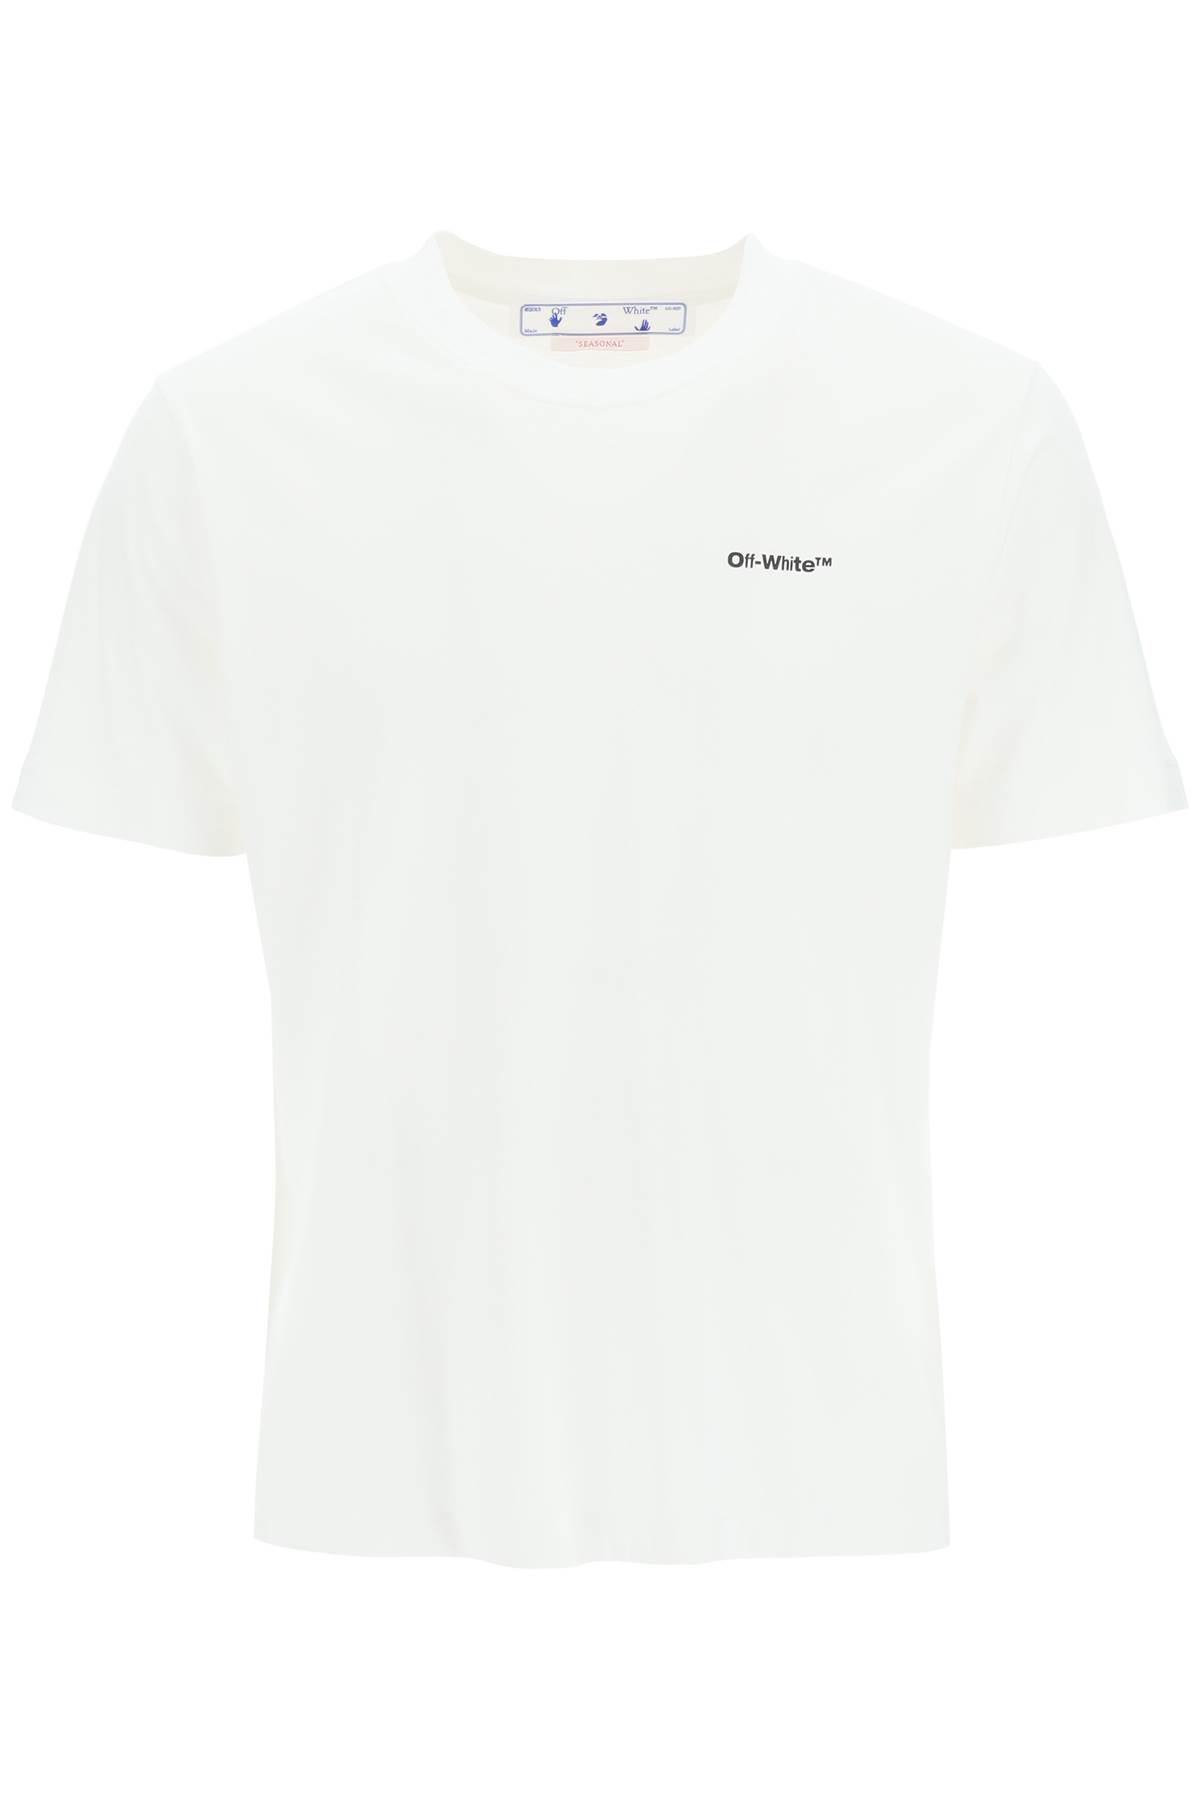 Off-White wave Diag Print Slim T-shirt